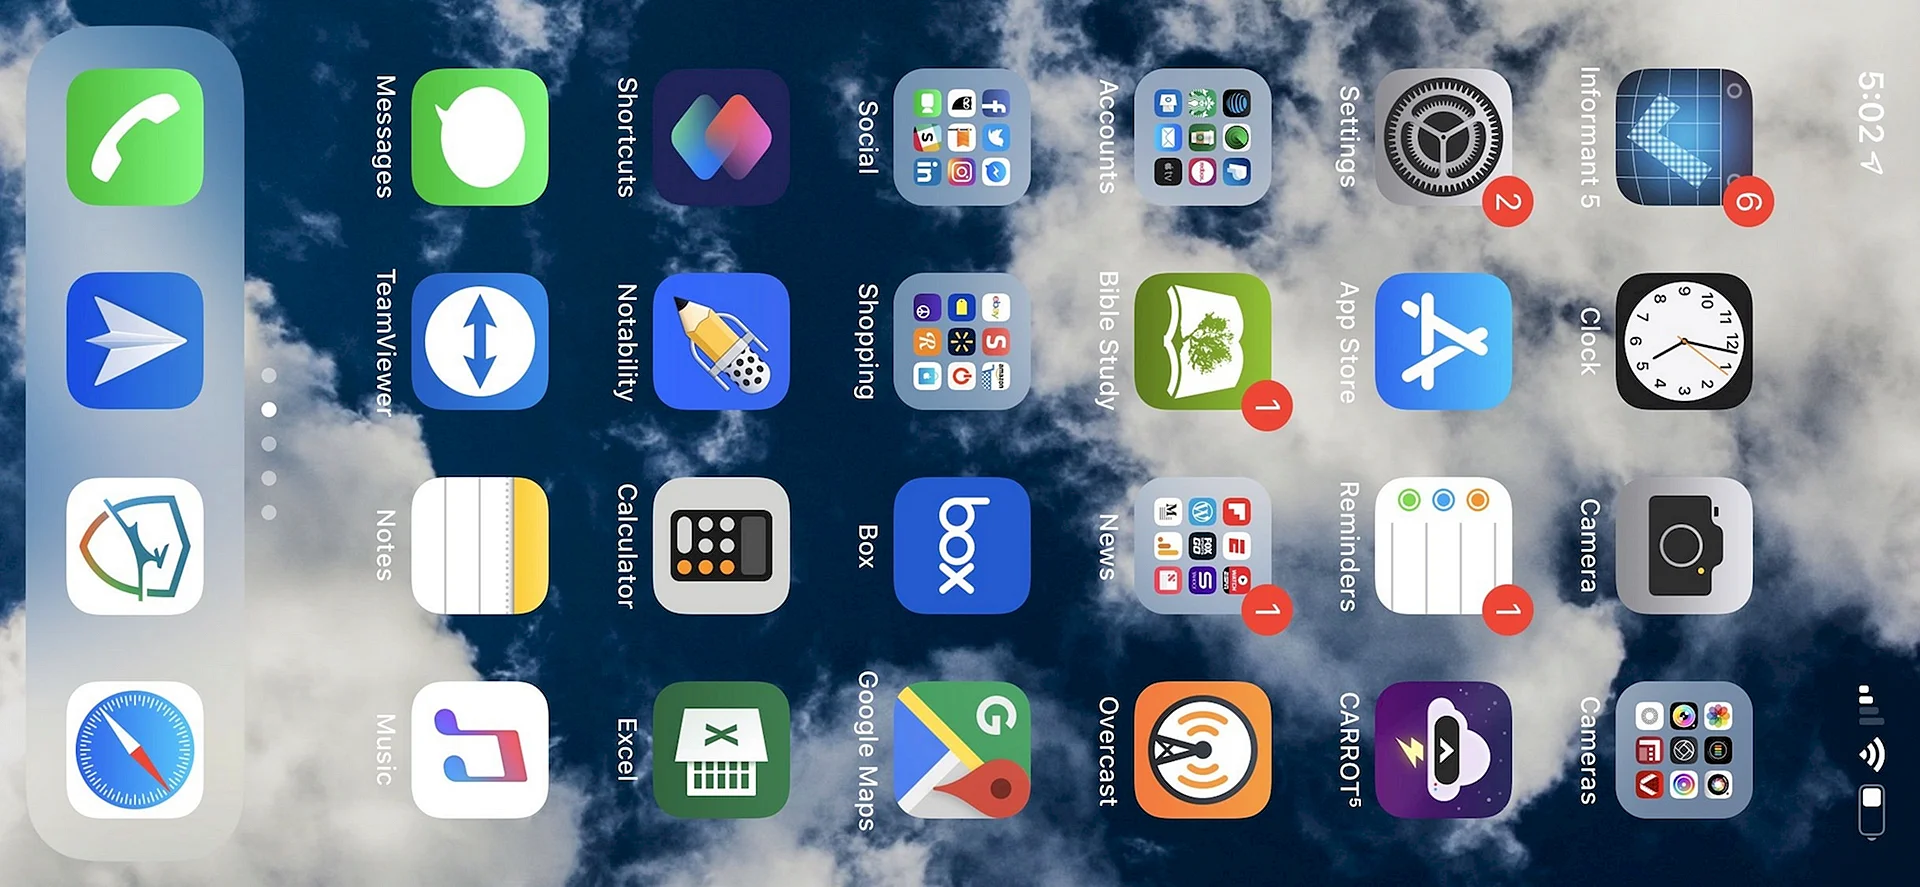 Iphone Xs Home Screen Wallpaper